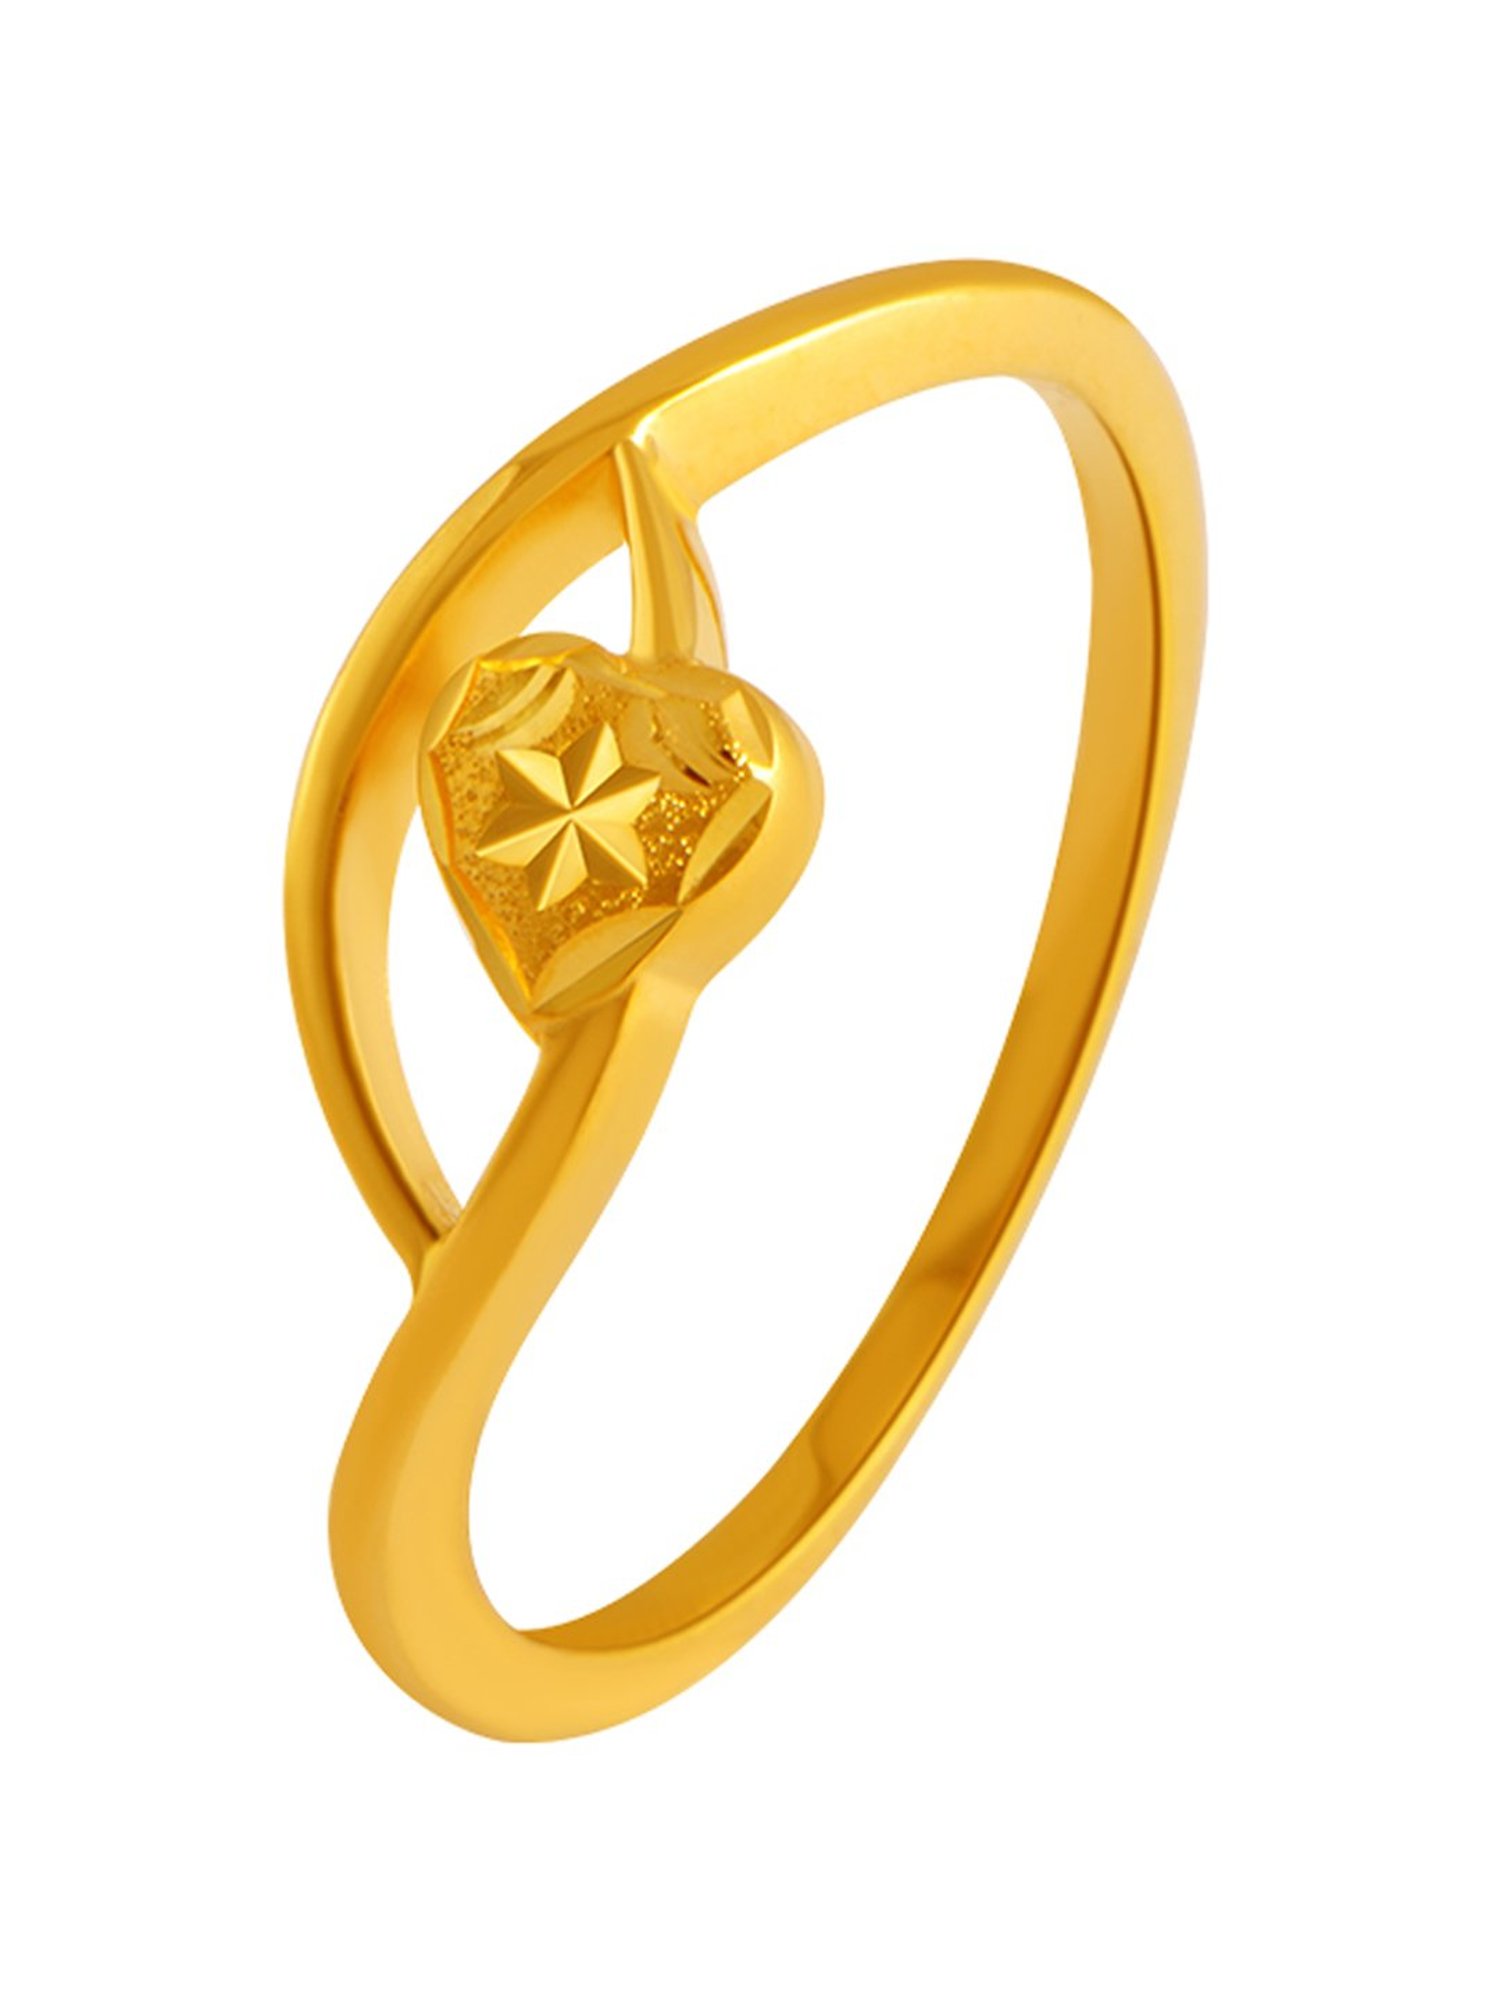 Gold Finger Rings Online | PC Chandra Jewellers Rings